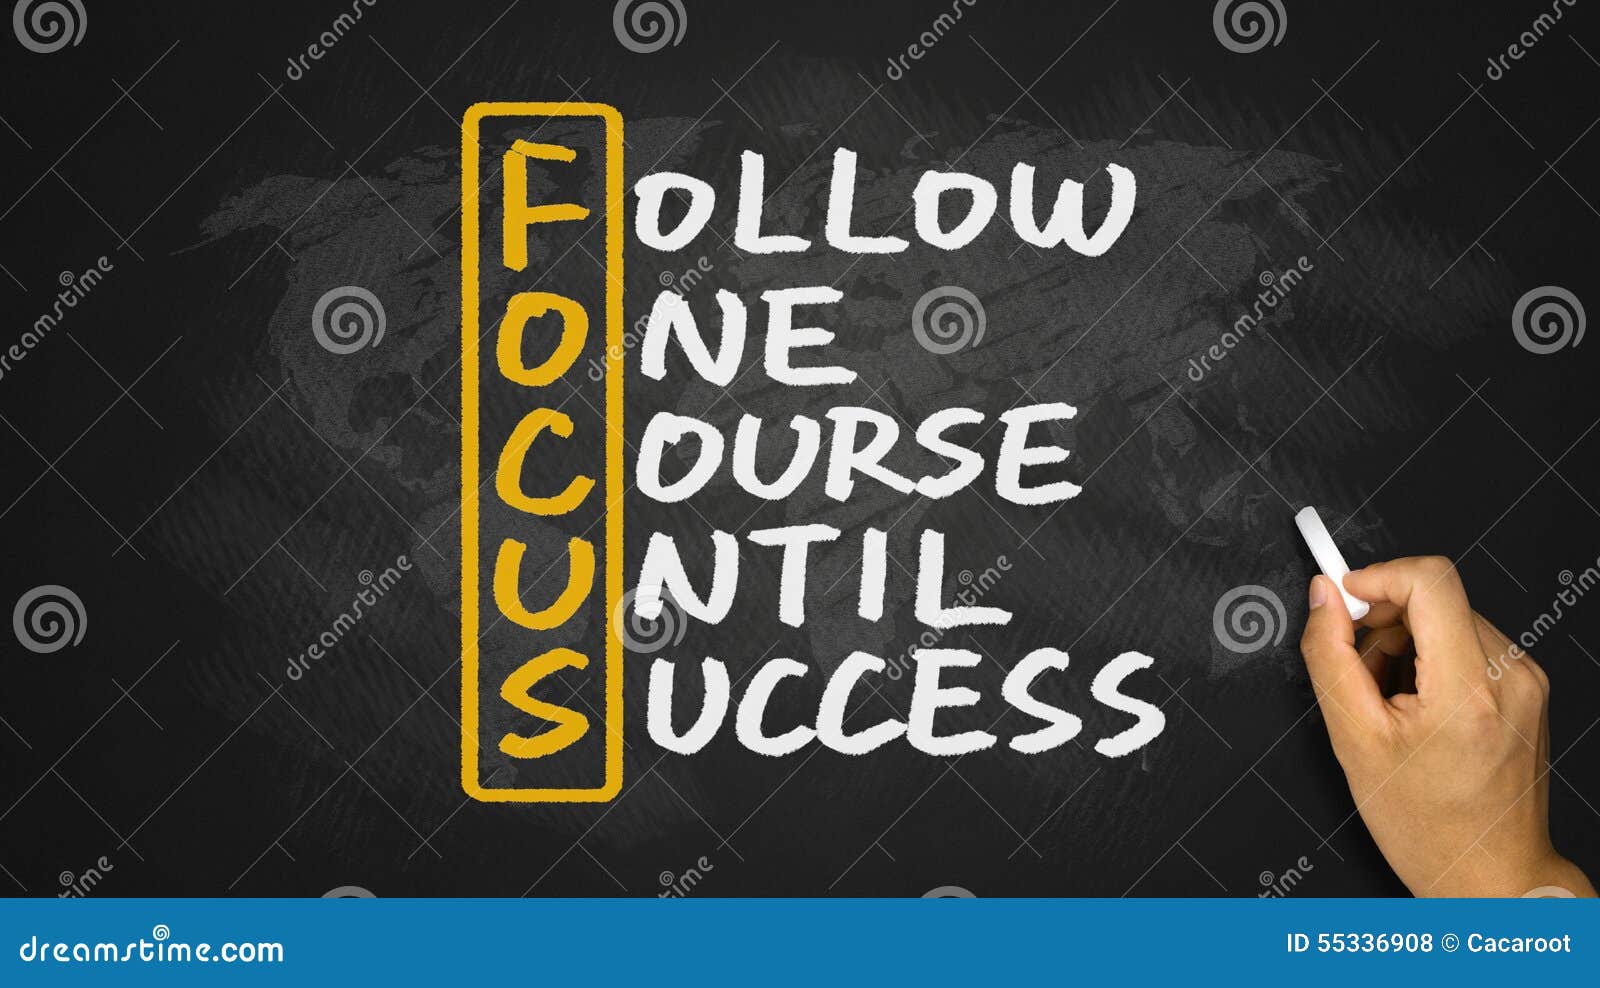 follow-one-course-success-handwritten-blackboard-focus-acronym-55336908.jpg